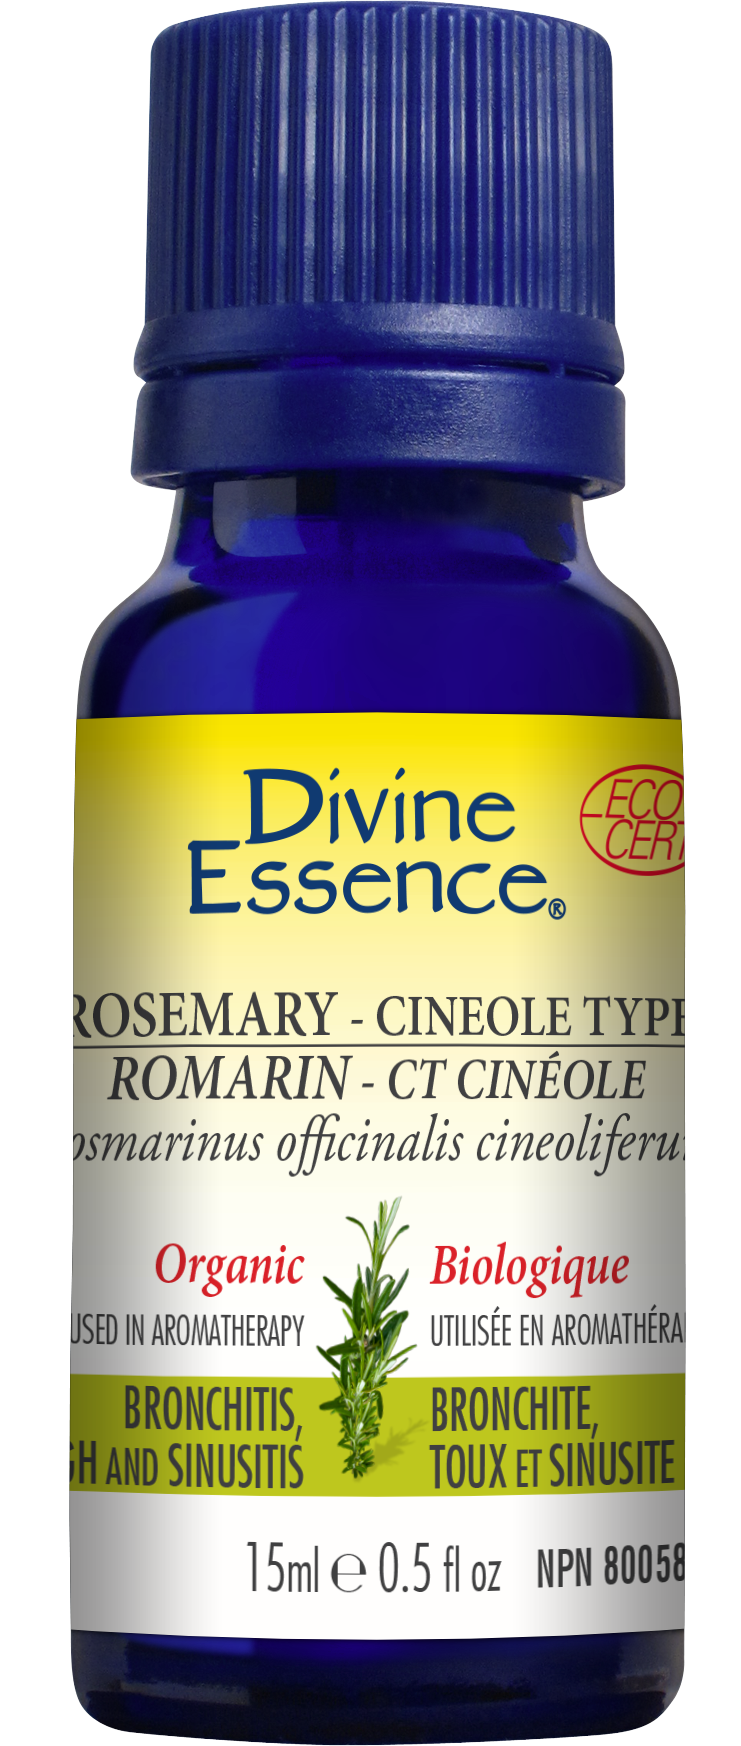 Divine Essence Rosemary Cineole Type 15ml